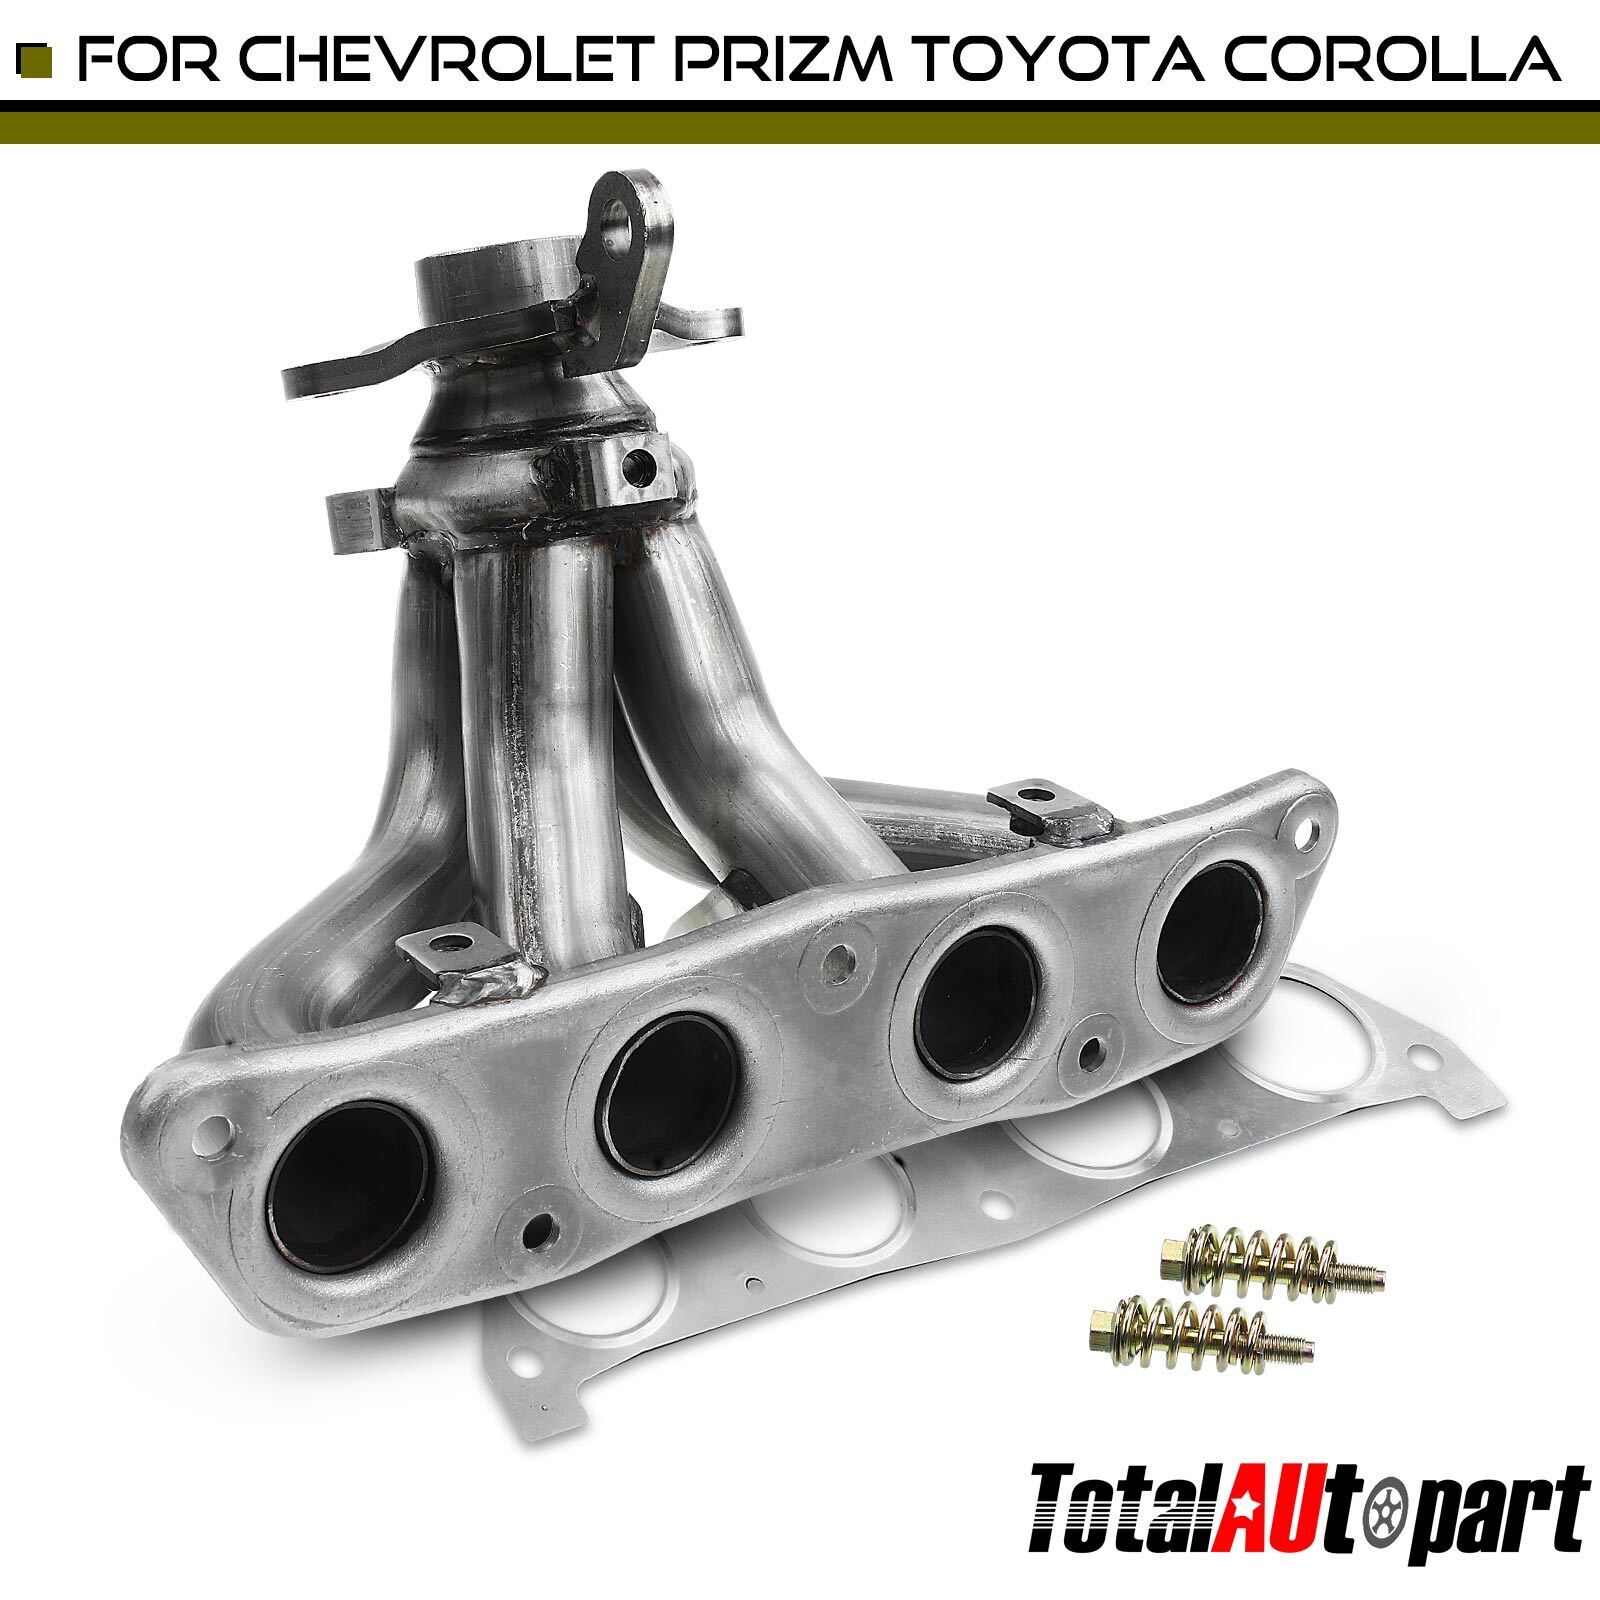 New Exhaust Manifold w/ Gasket for Chevrolet Prizm Toyota Corolla L4 1.8L Petrol